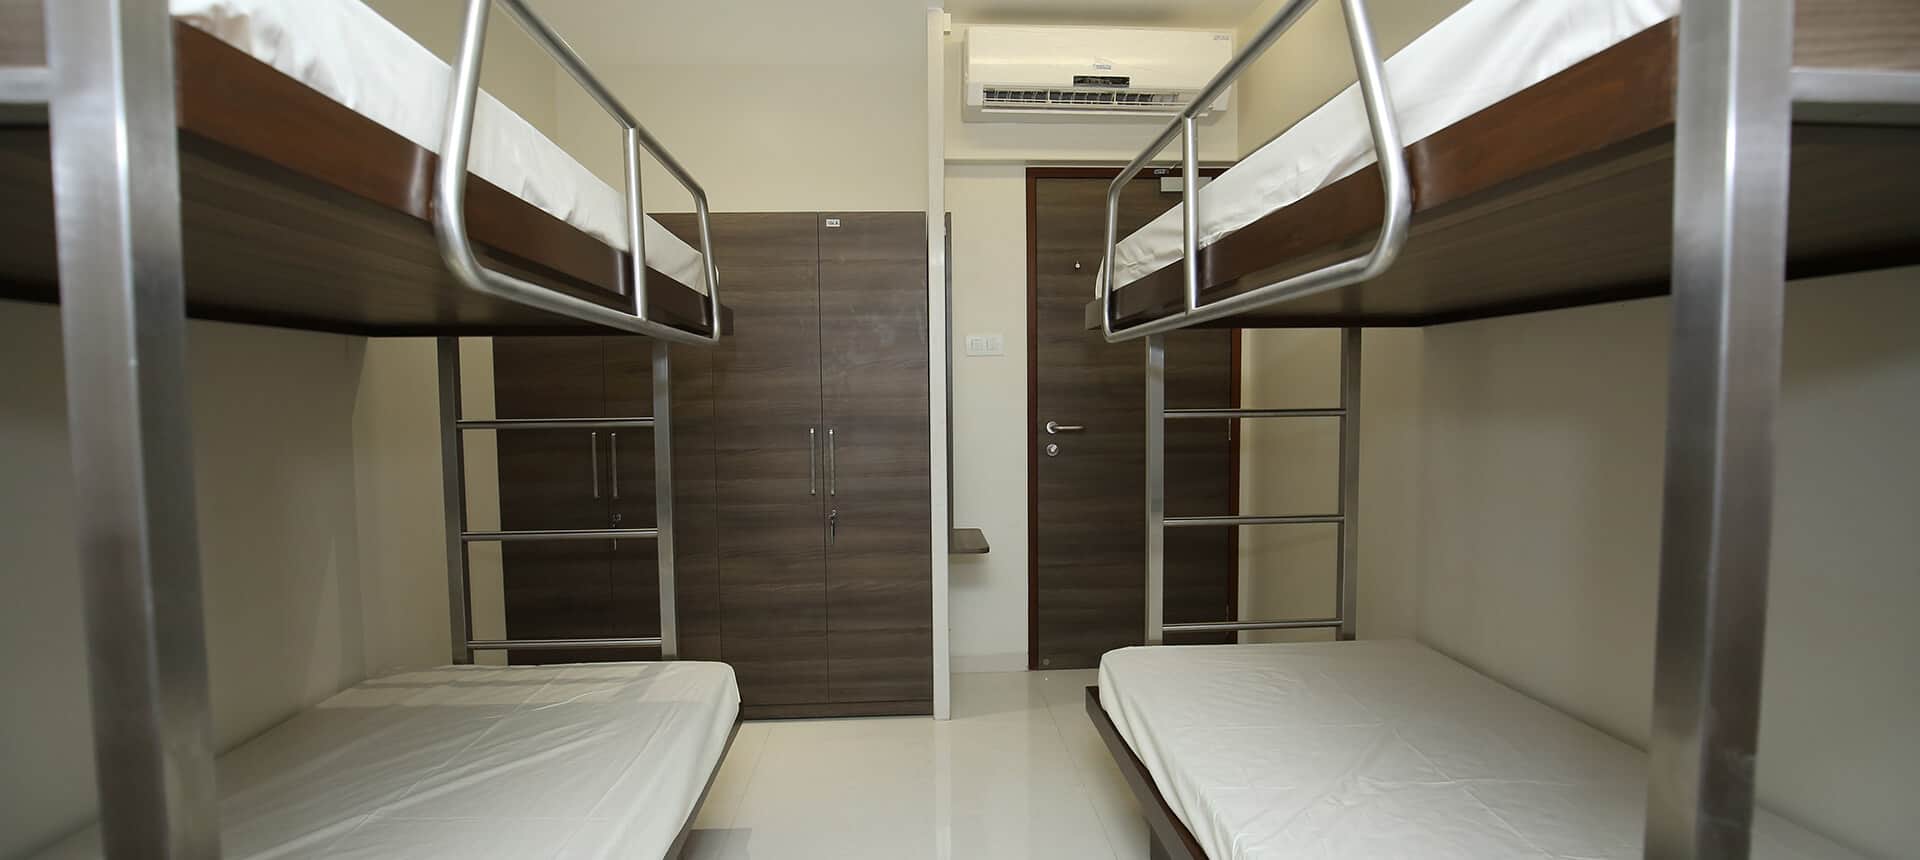 student hostel in mumbai